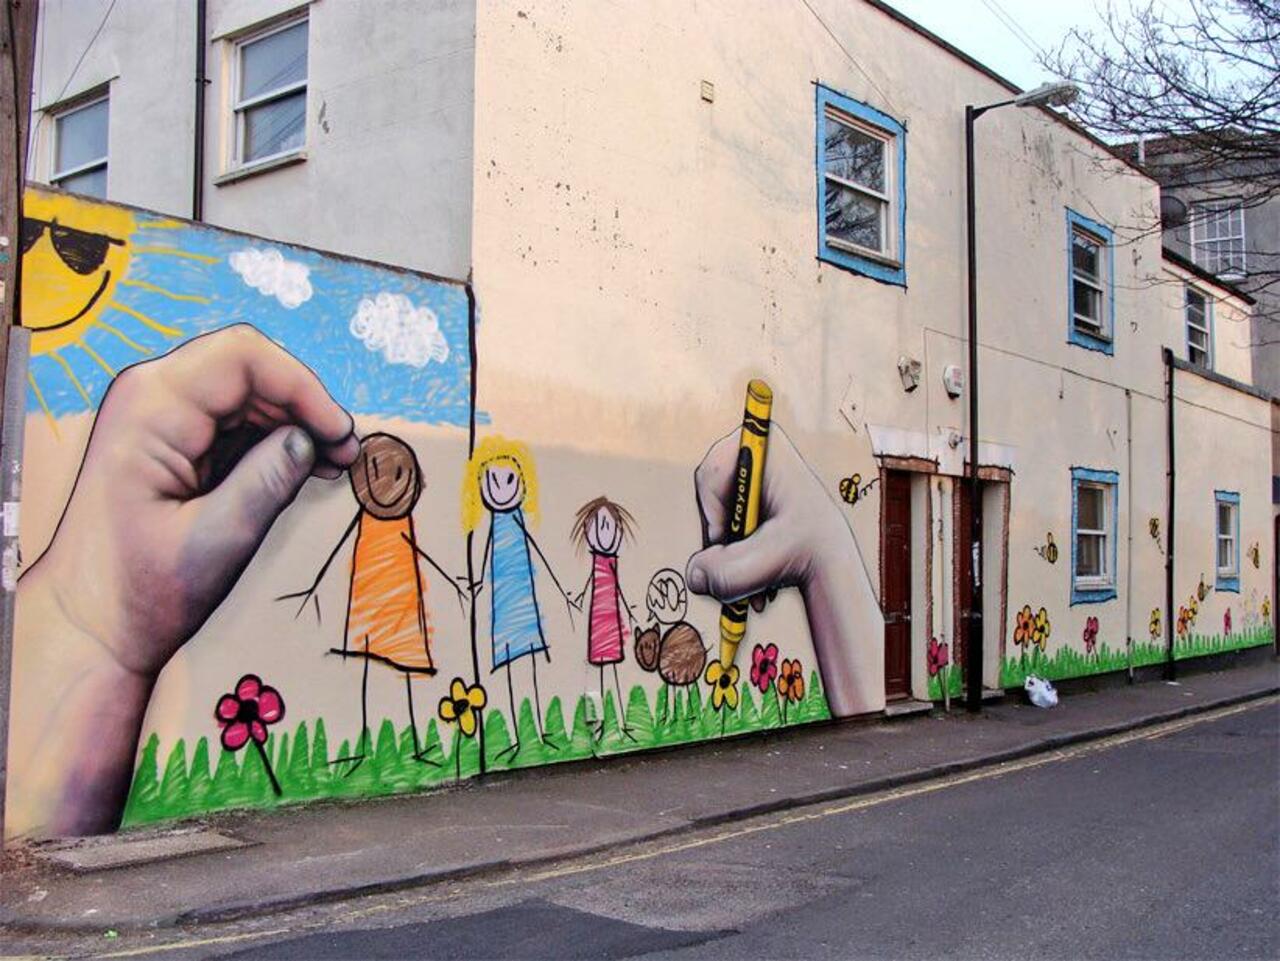 “@Pitchuskita: Done Ad
Bristol
#streetart #art #graffiti #mural http://t.co/MqMLDubnzb”